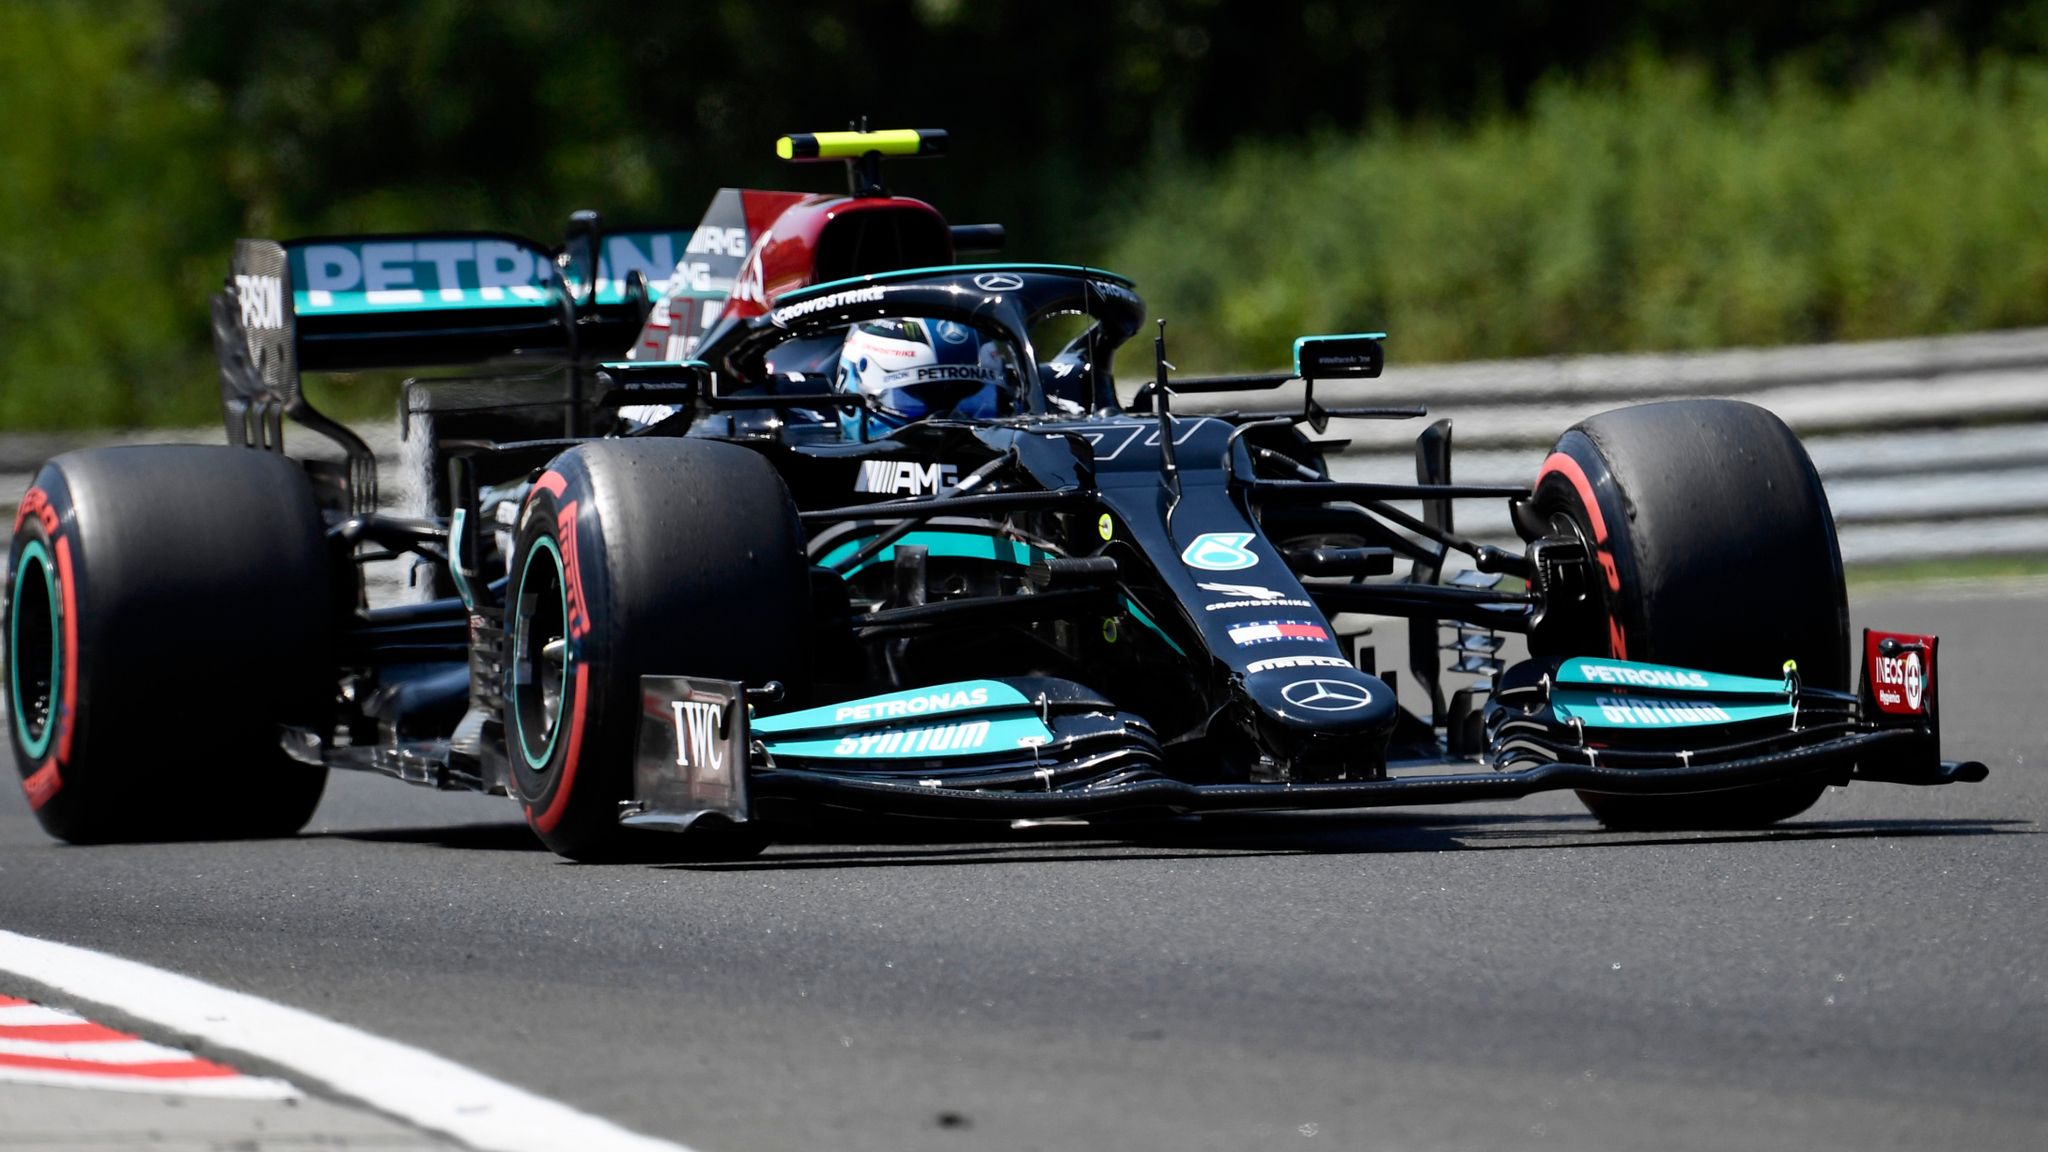 Hungarian GP Lewis Hamilton ahead of Max Verstappen in final practice, Mick Schumacher crashes F1 News